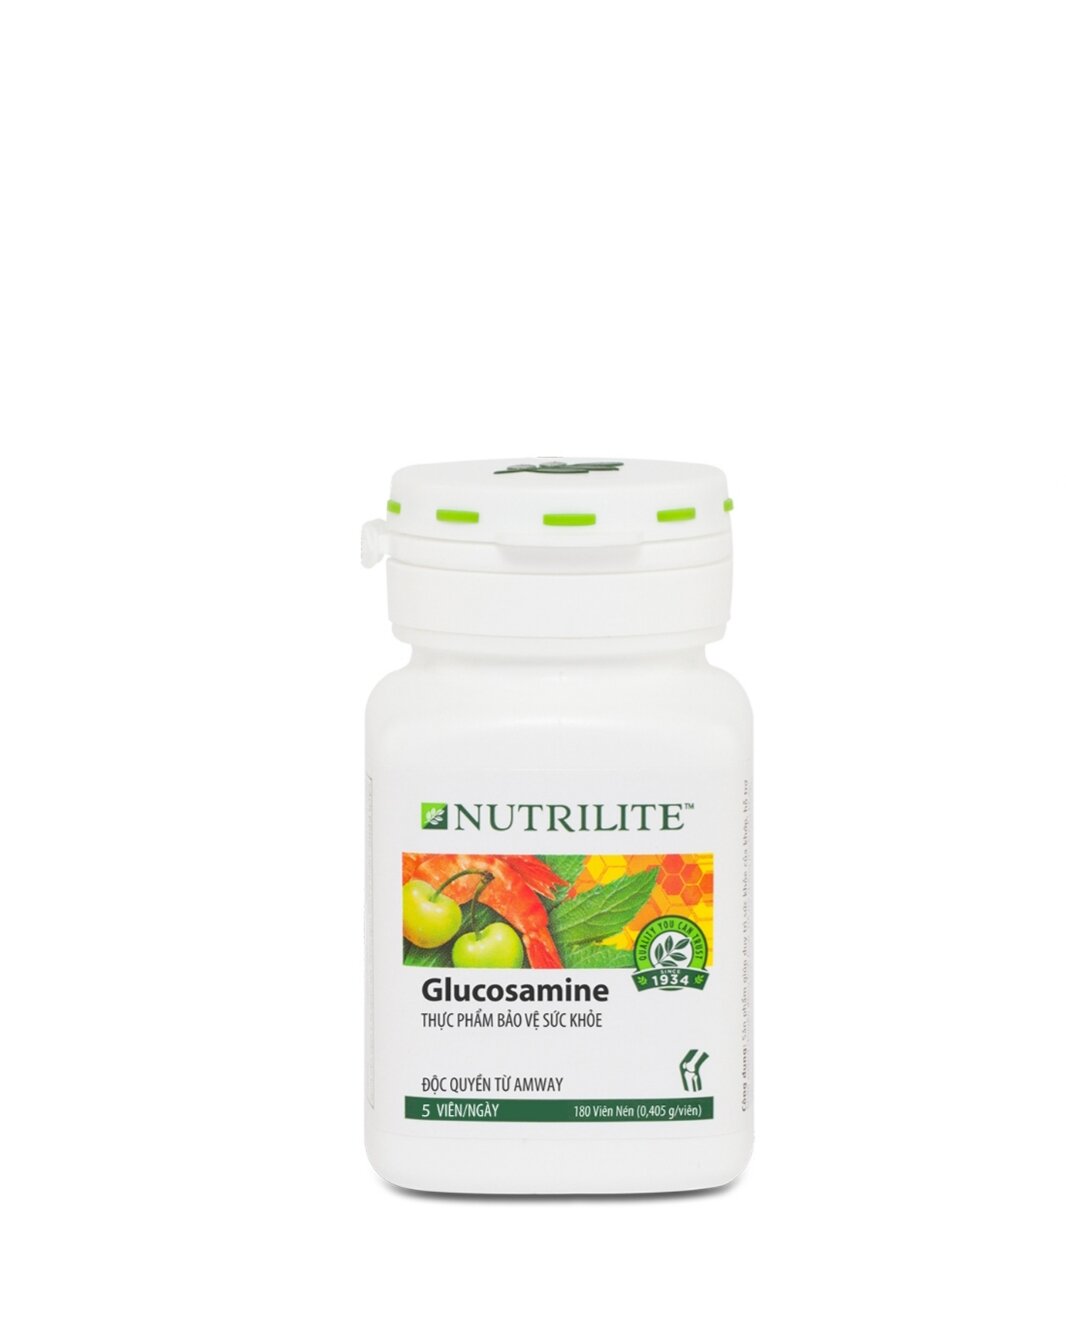 Thực phẩm bảo vệ sức khỏe nutrilite glucosamine - ảnh sản phẩm 1